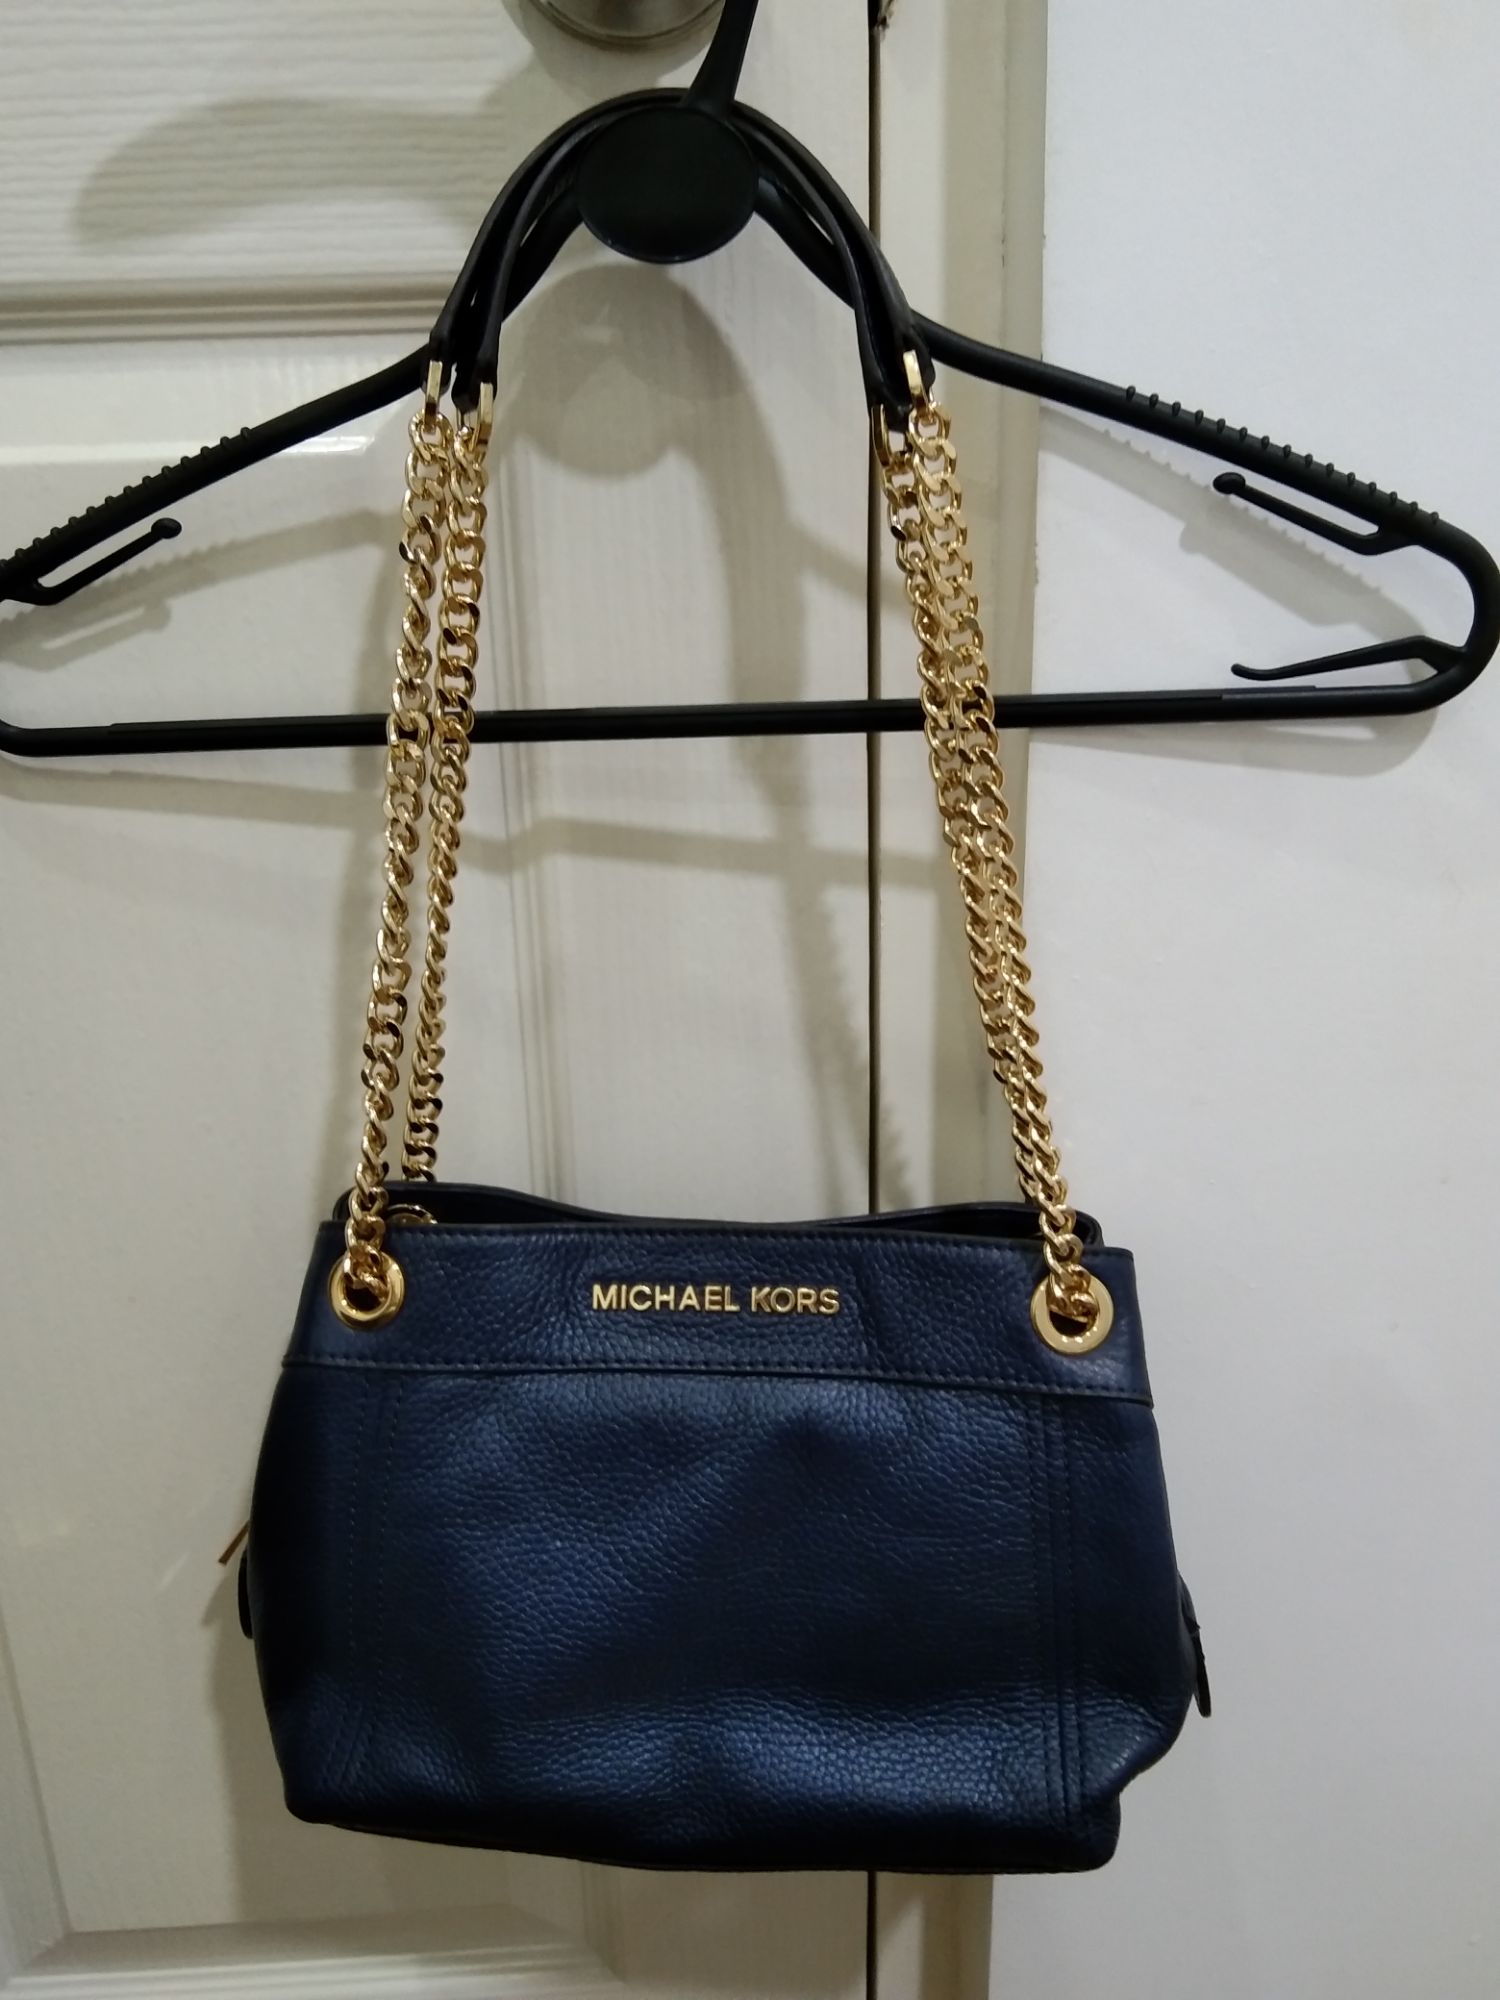 authentic MICHAEL KORS bag shoulder bag black/gold leather medium chain  messenger Measurements: 